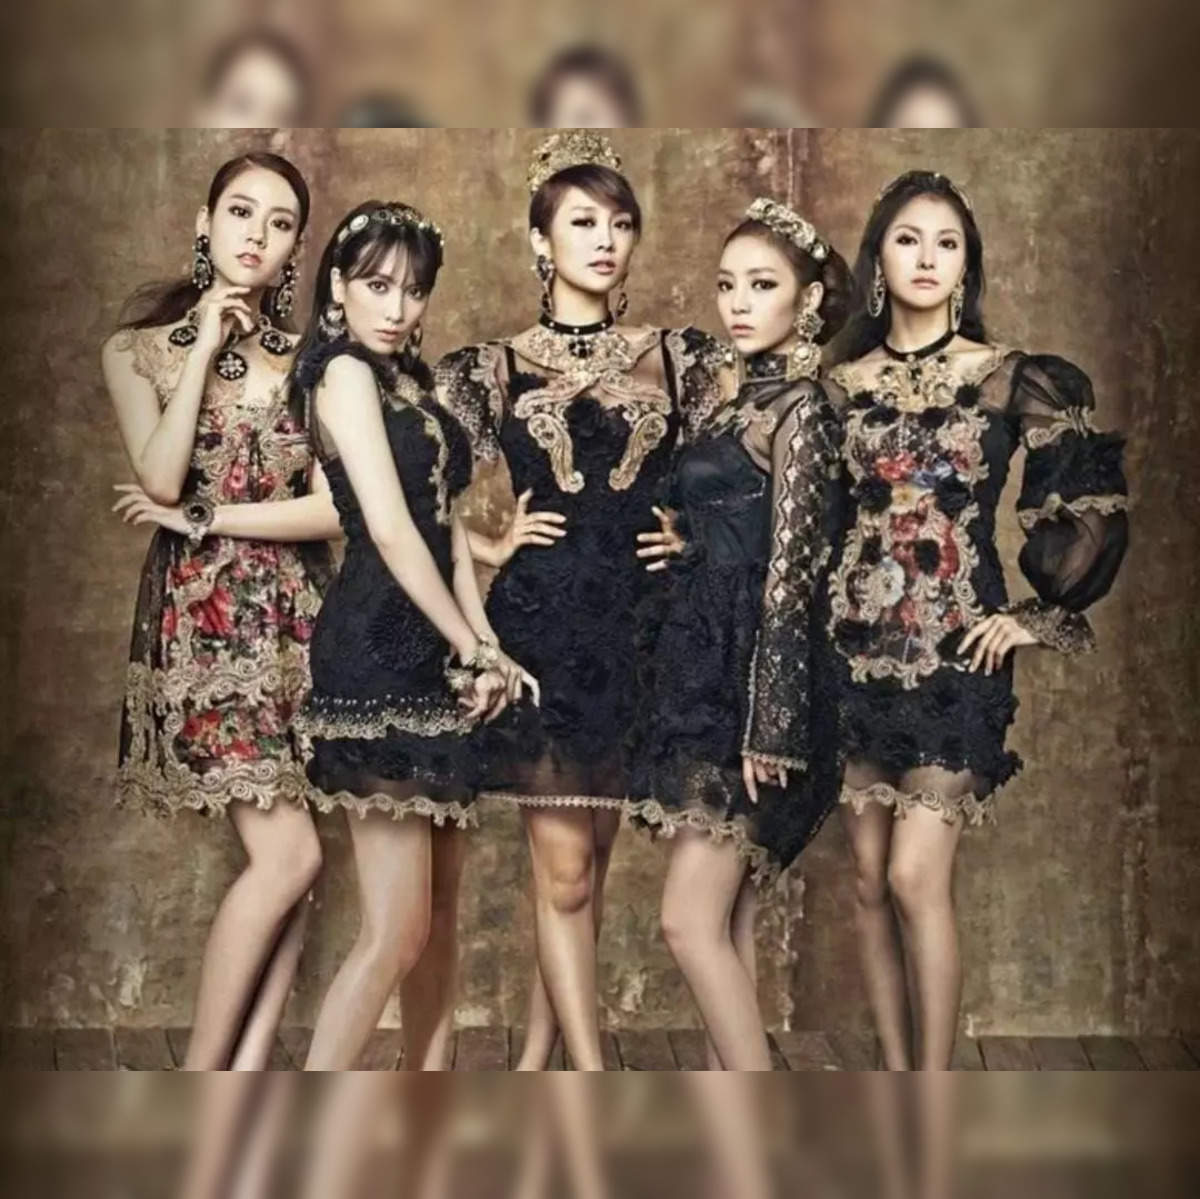 kara kpop: KARA girl group makes comeback with 'Move Again